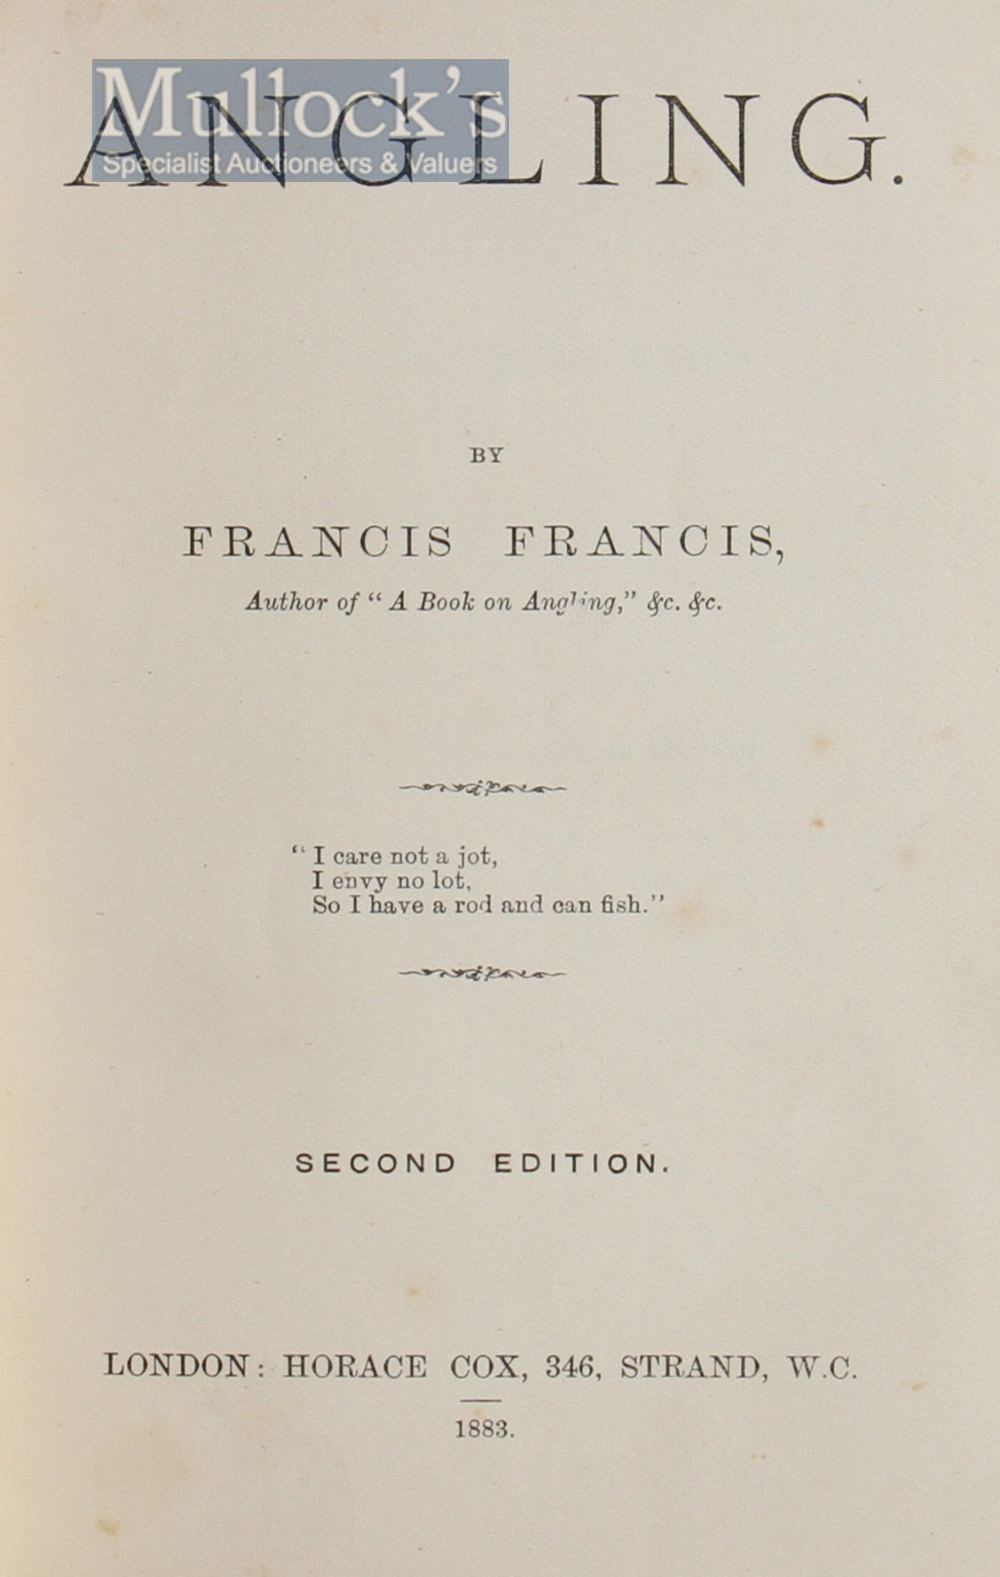 Fishing Book - Francis, Francis - “Angling” 1883, 2nd Ed, London, full calf binding with gold - Image 2 of 2